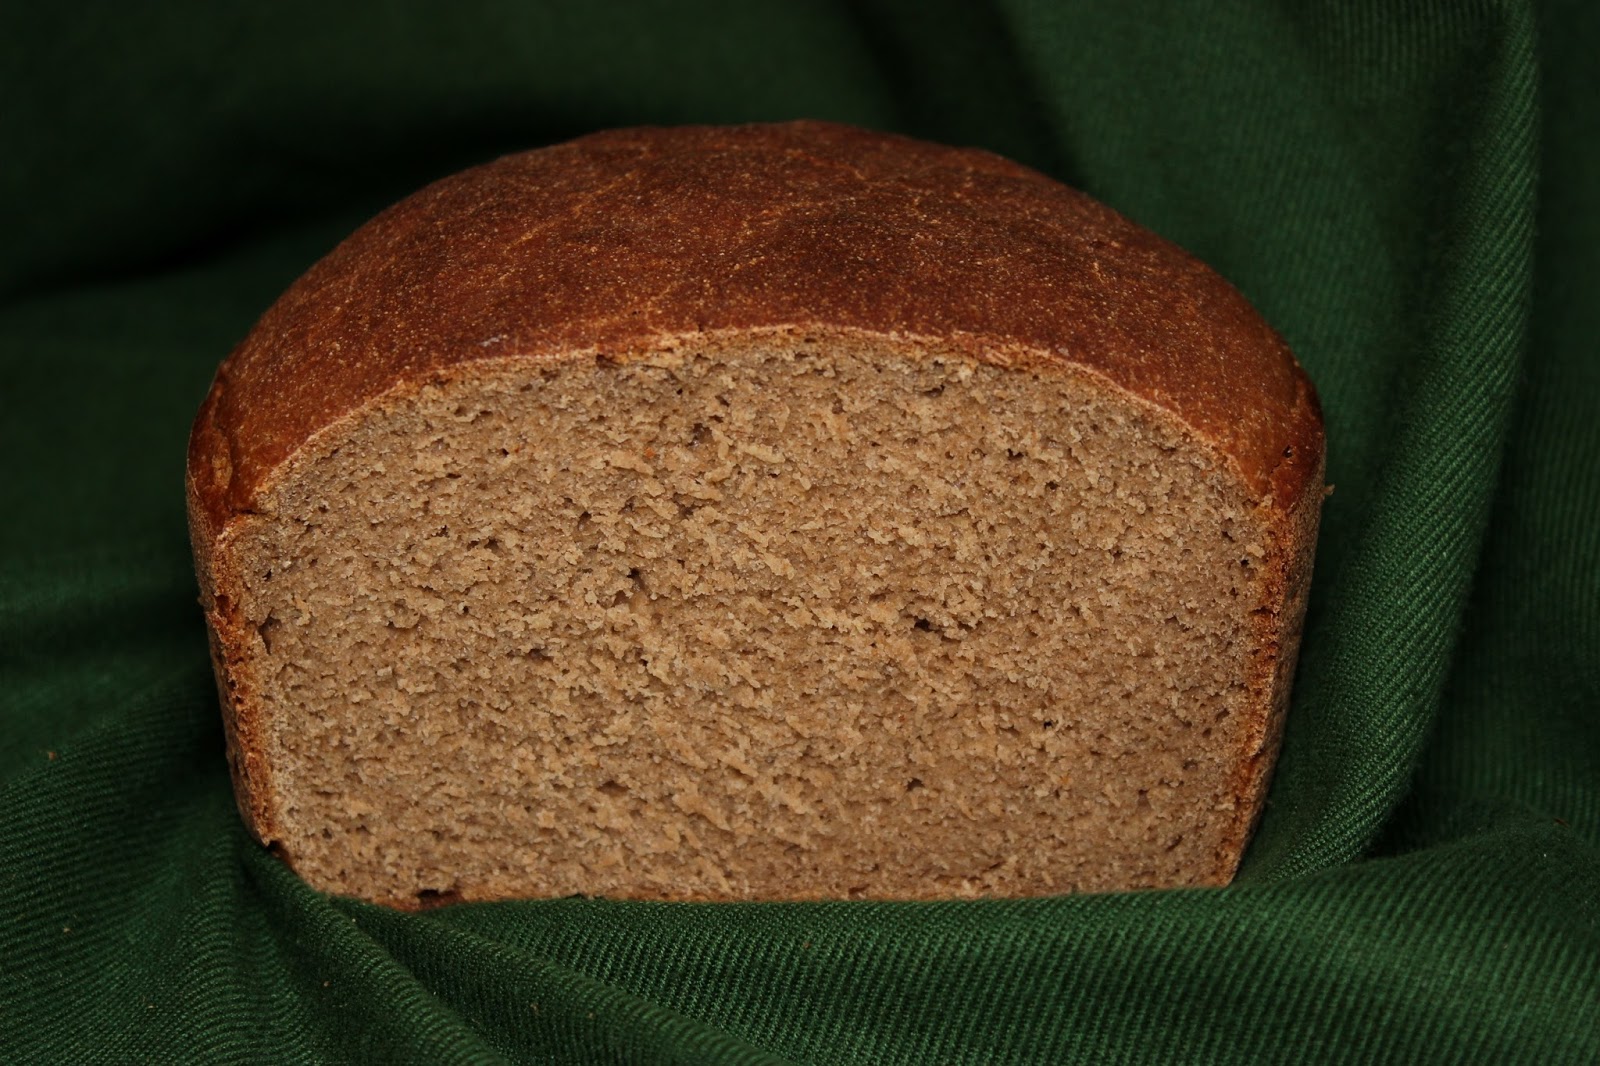 Дарницкий хлеб бездрожжевой рецепт